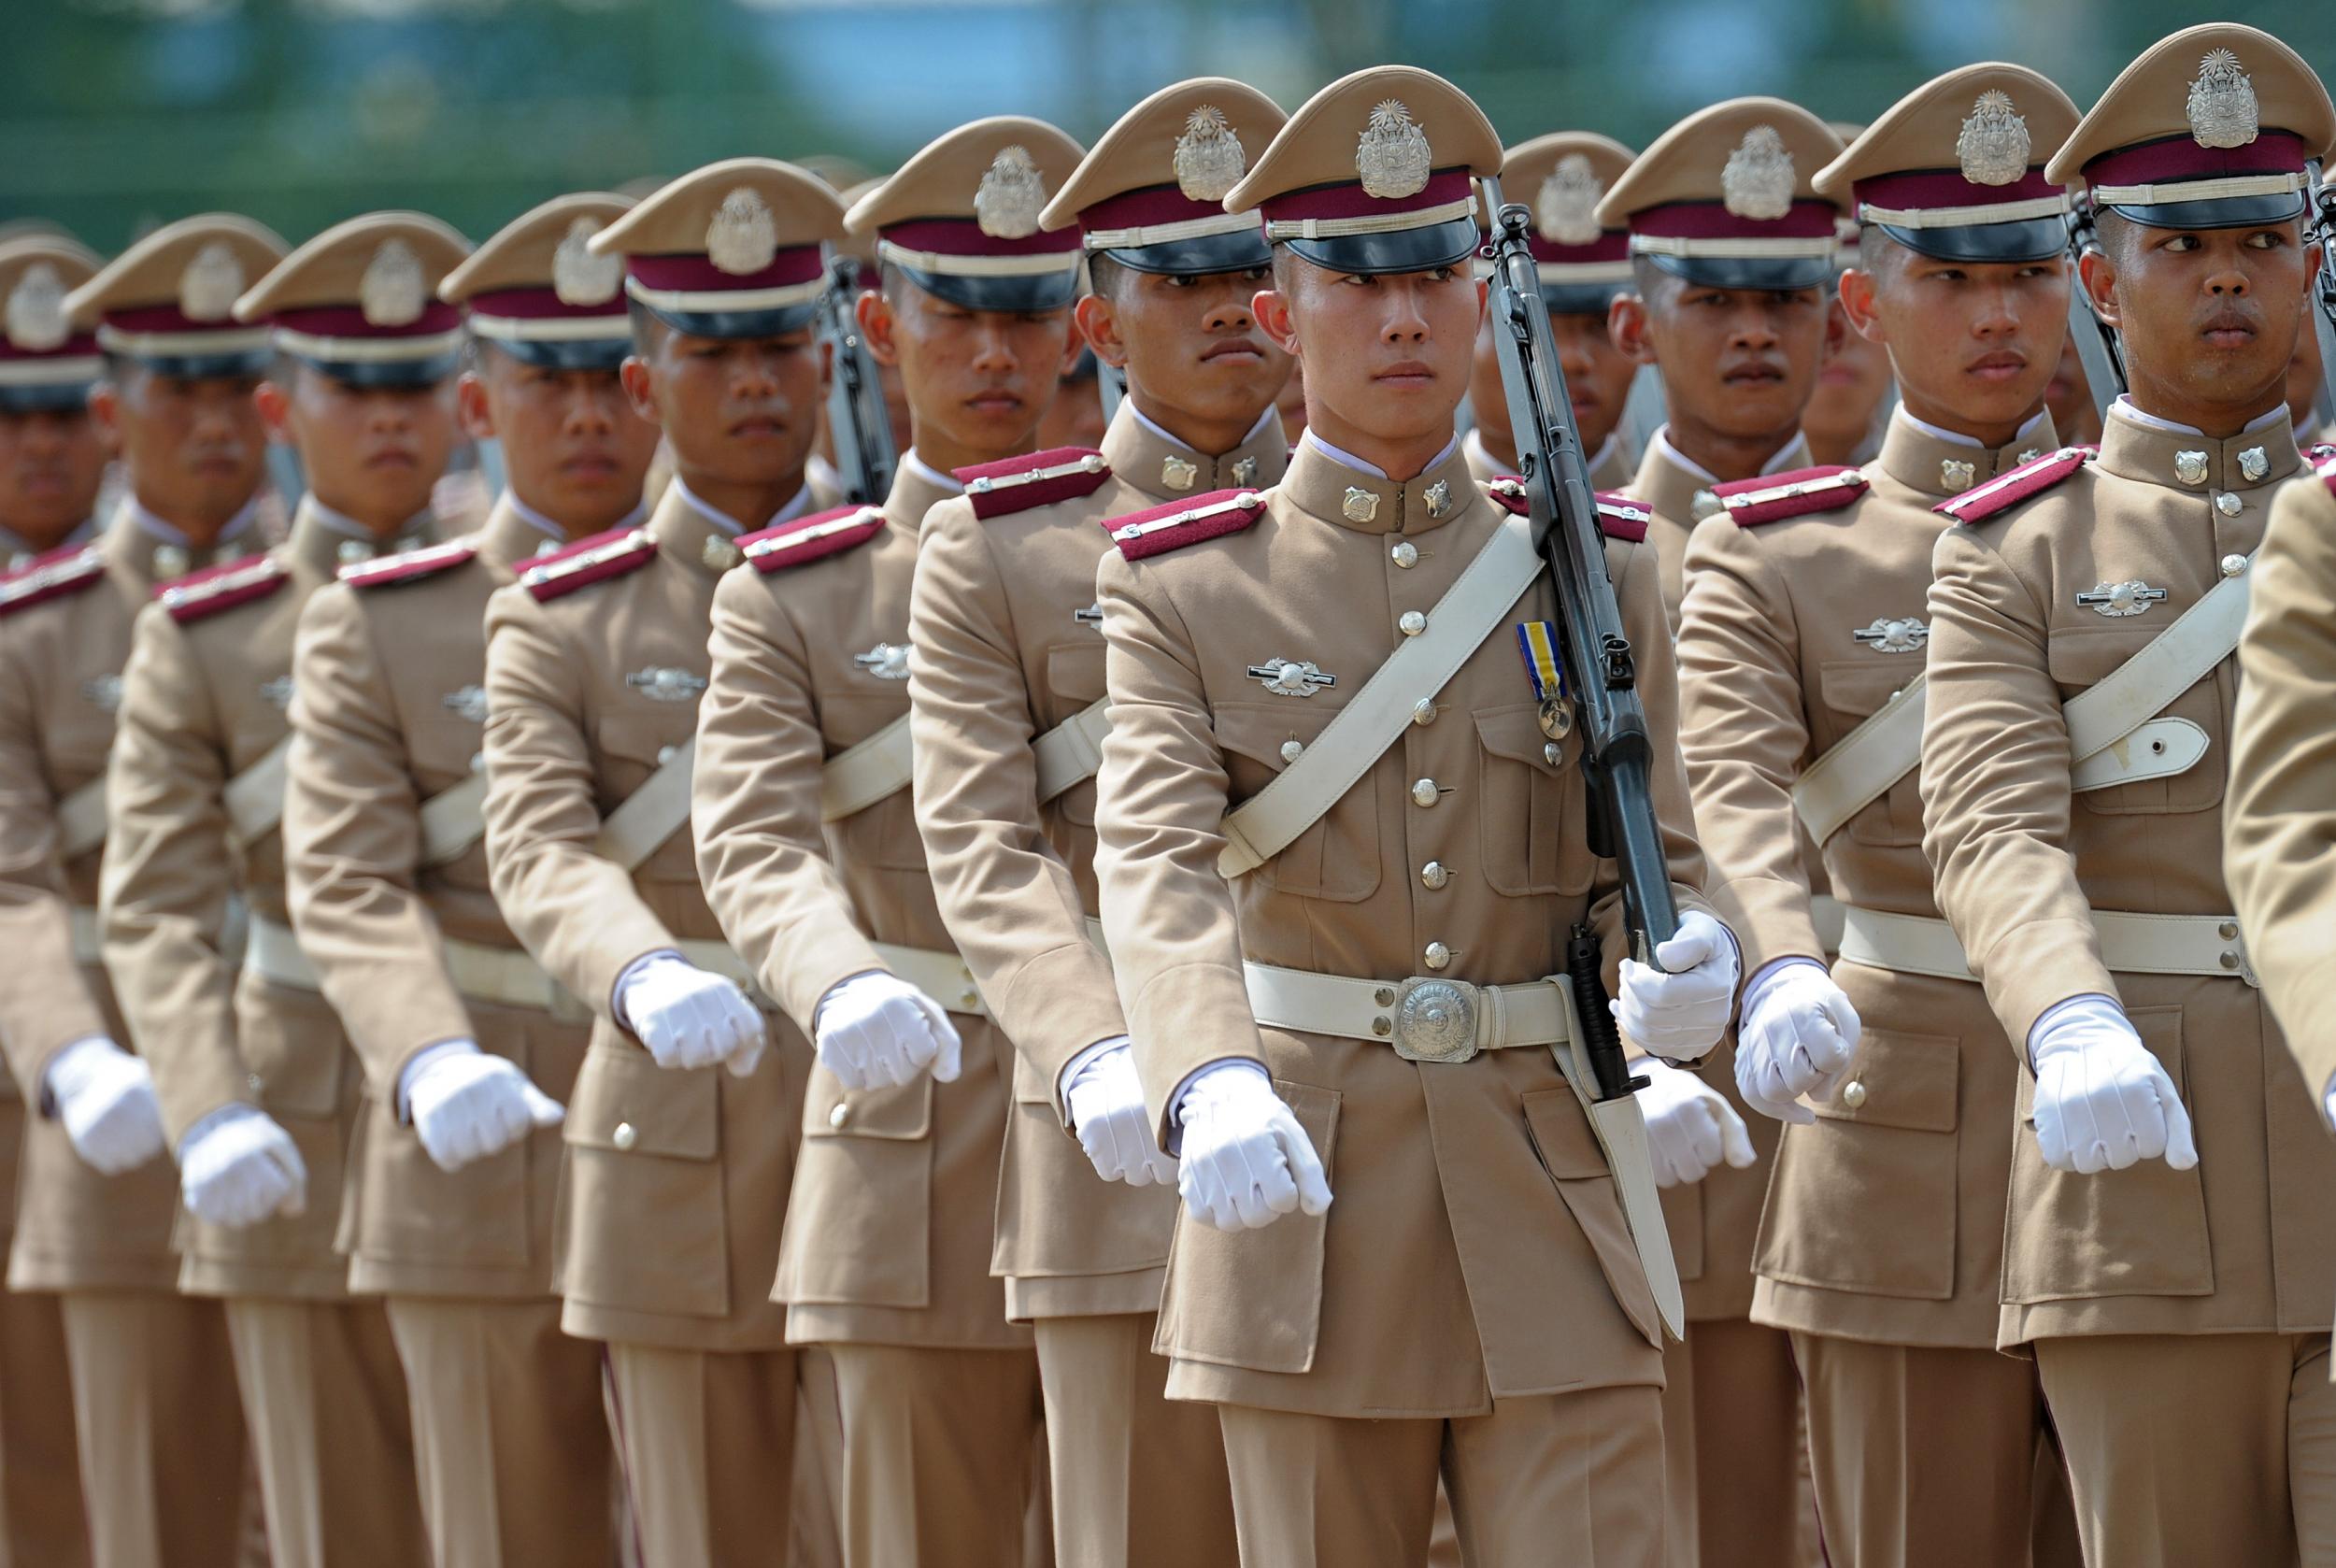 Thai police officers parade at Royal Police Cadet Academy in Nakorn Prathom province on 13 October 2010